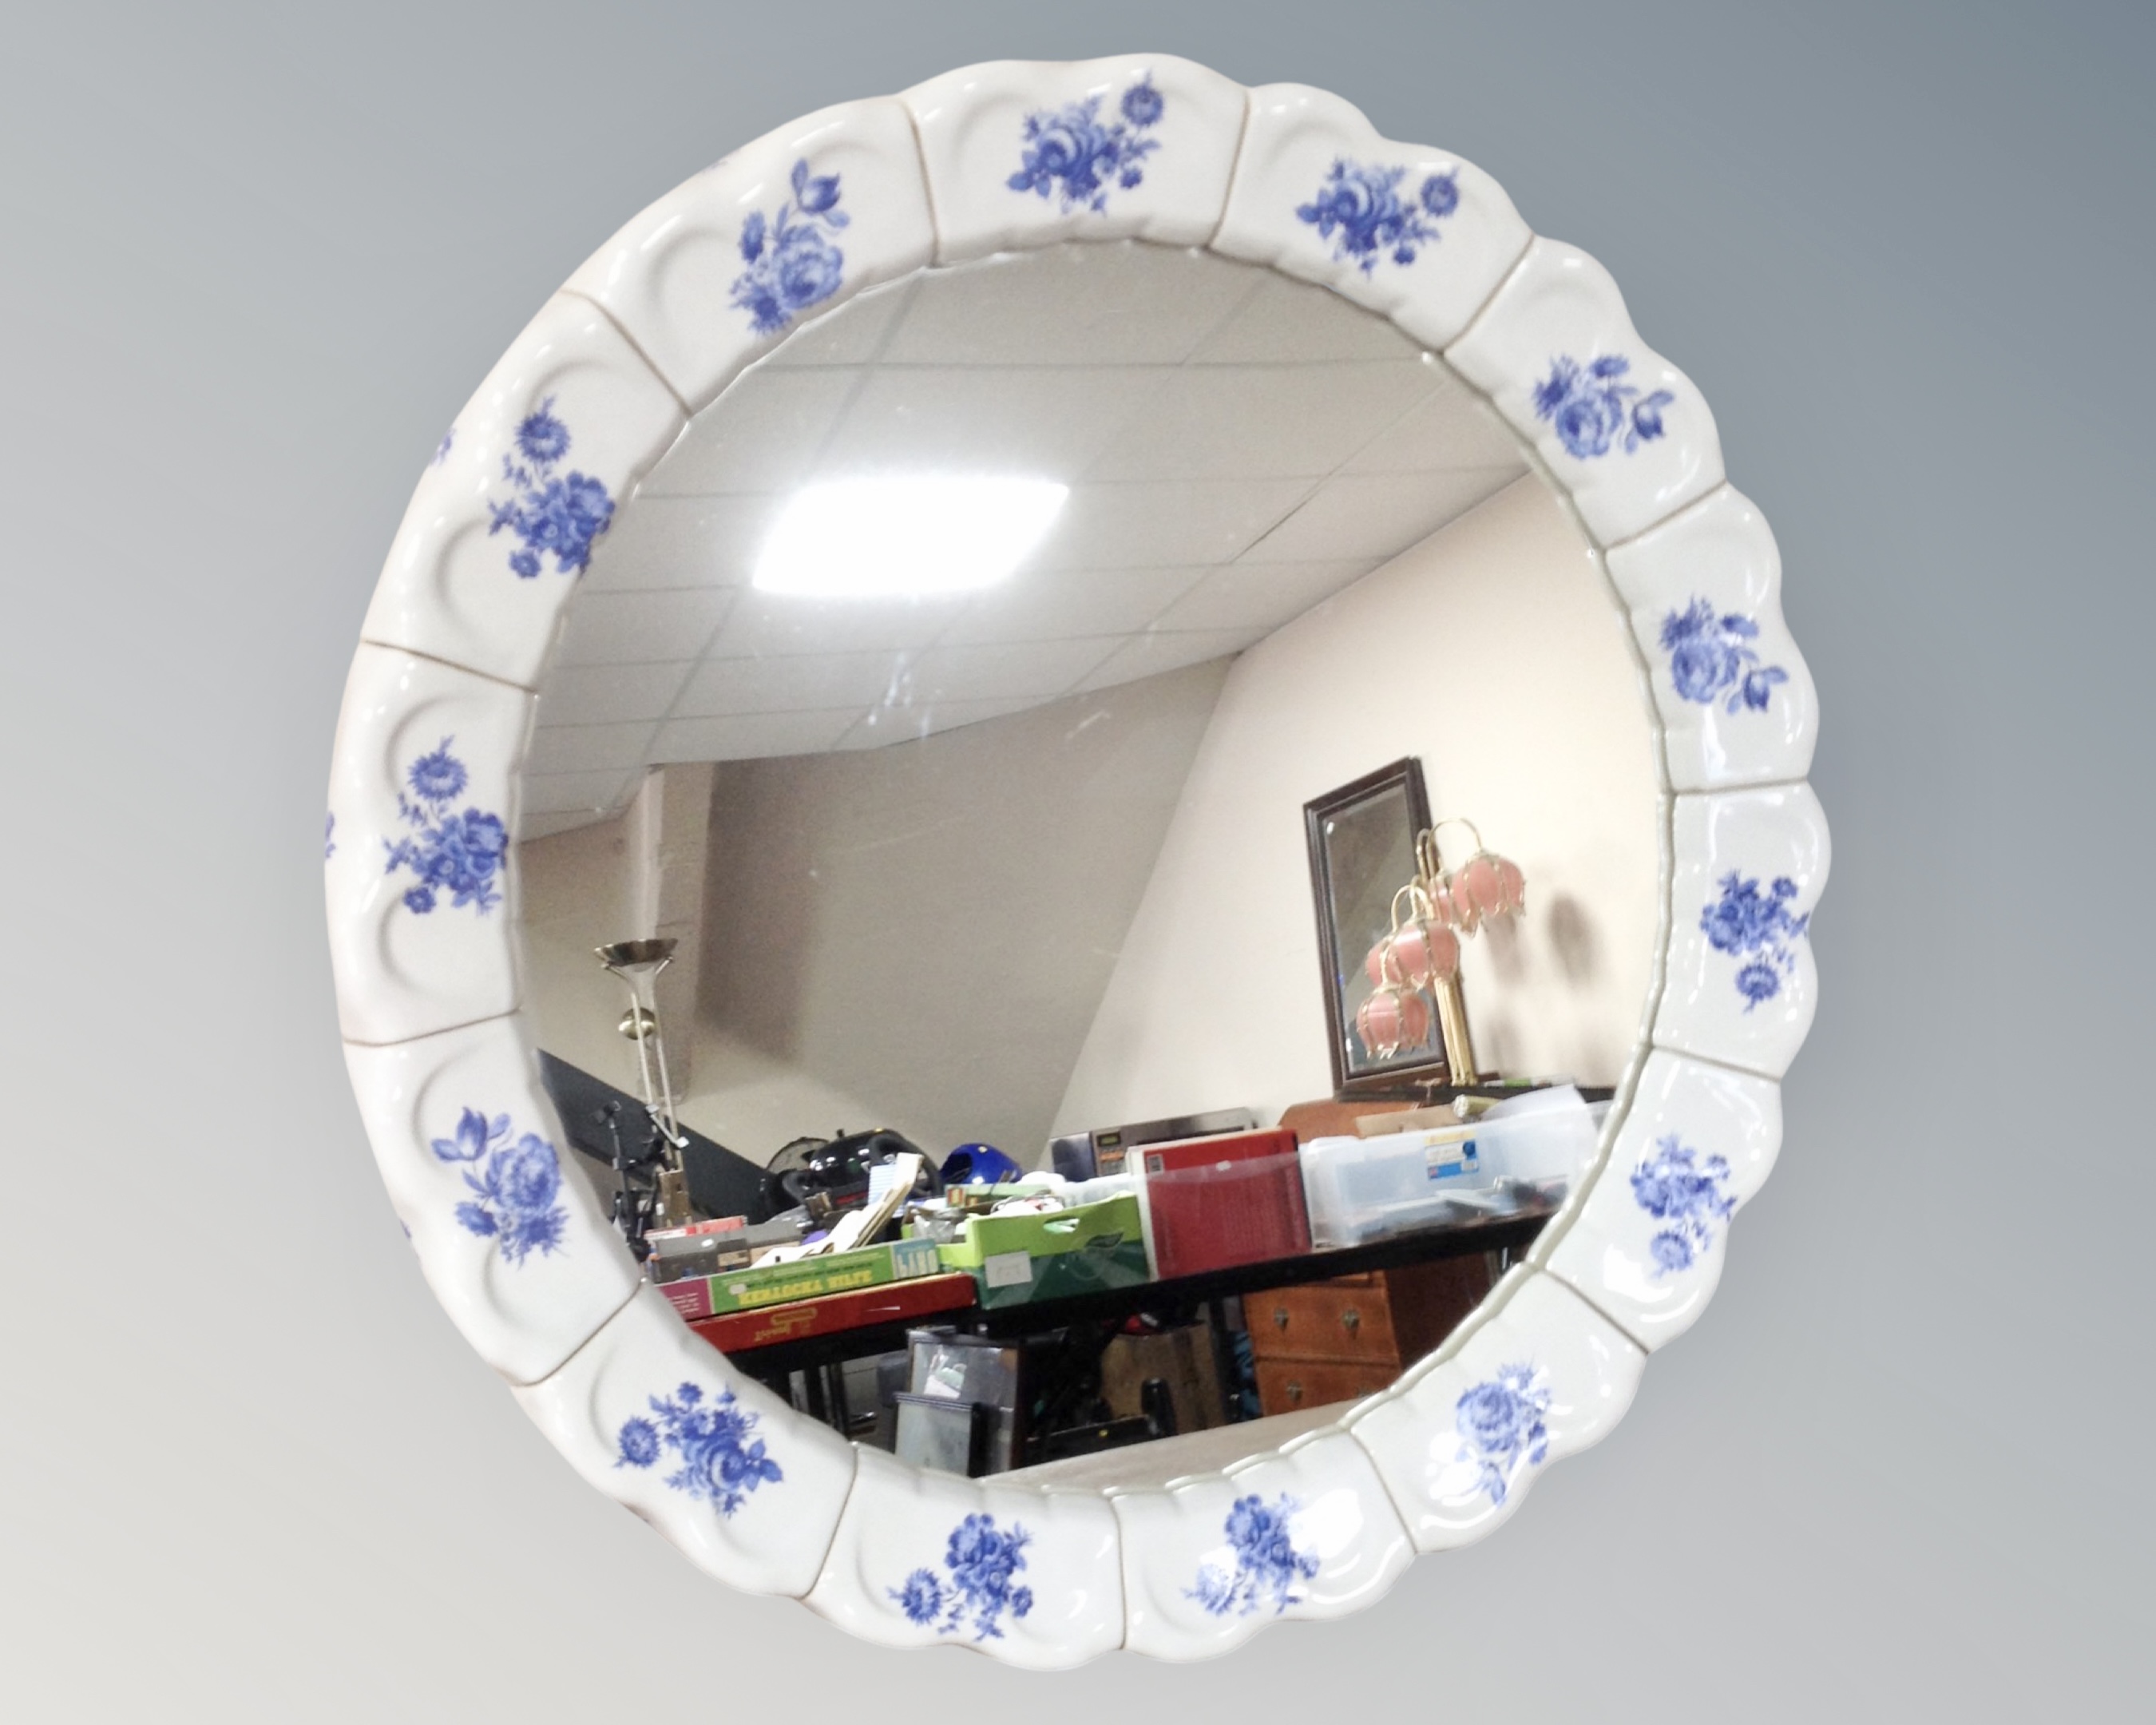 A circular blue and white ceramic framed mirror